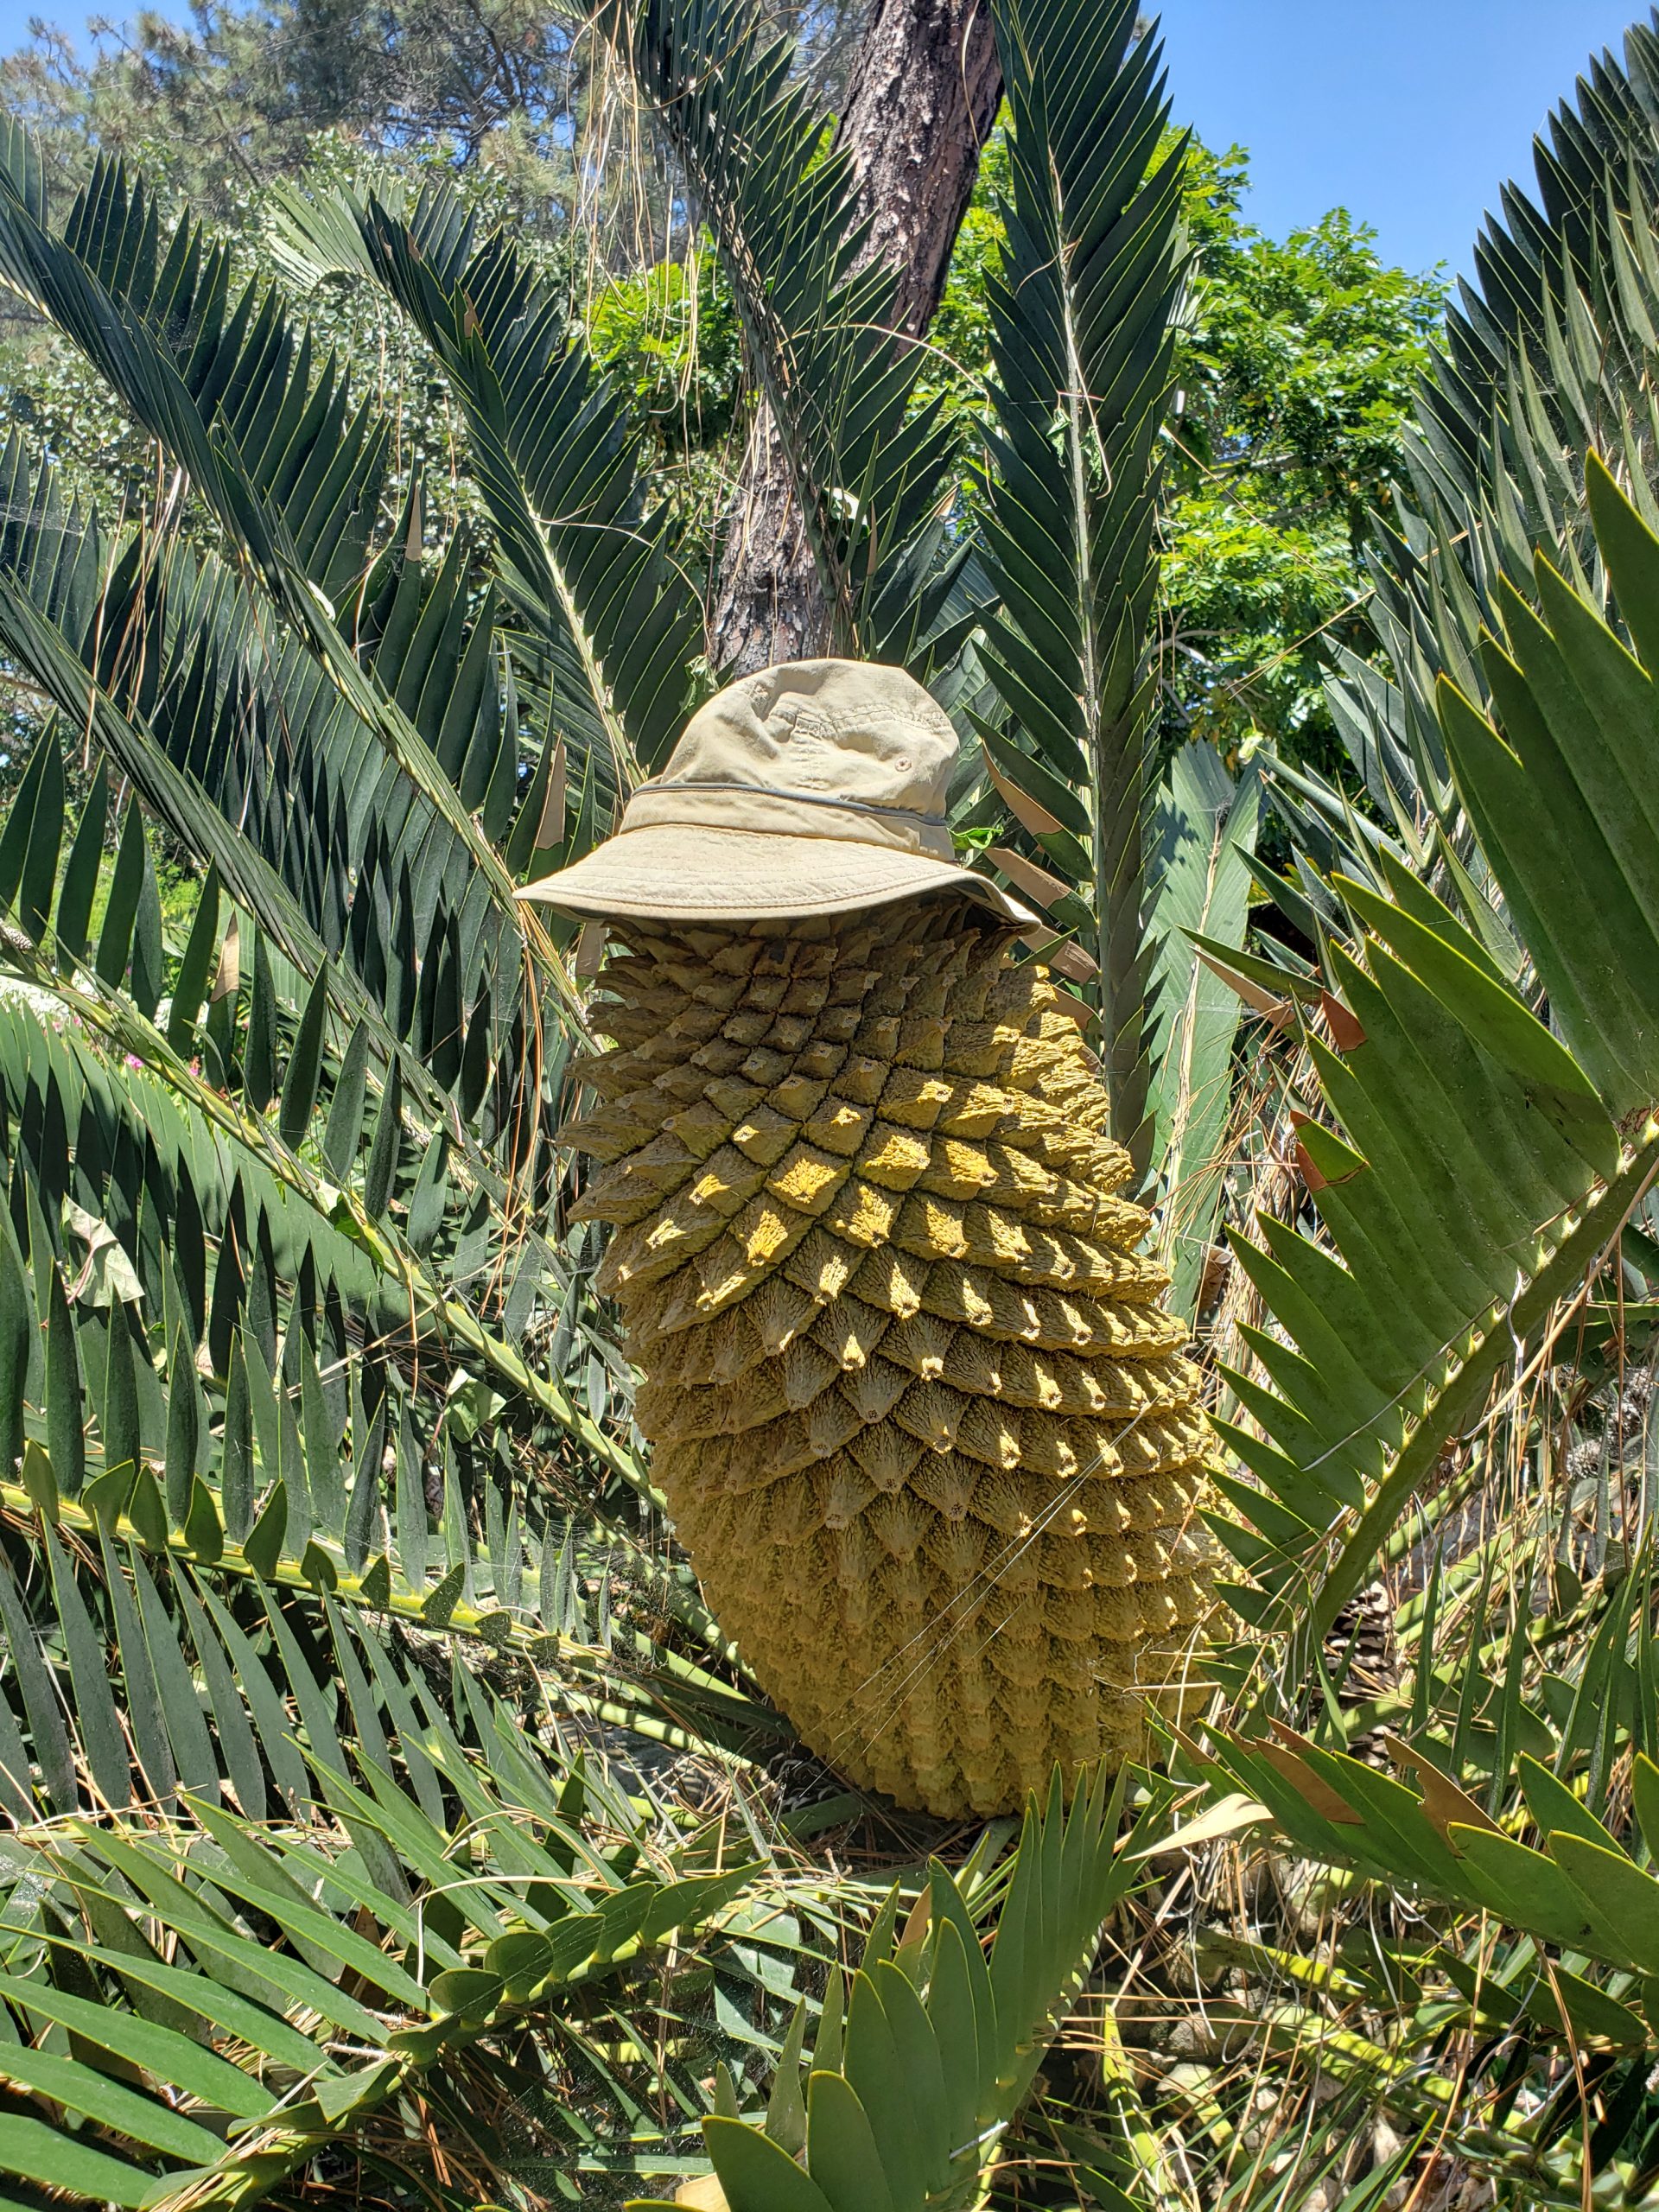 Image of Encephalartus longifolius cone ready for harvesting.